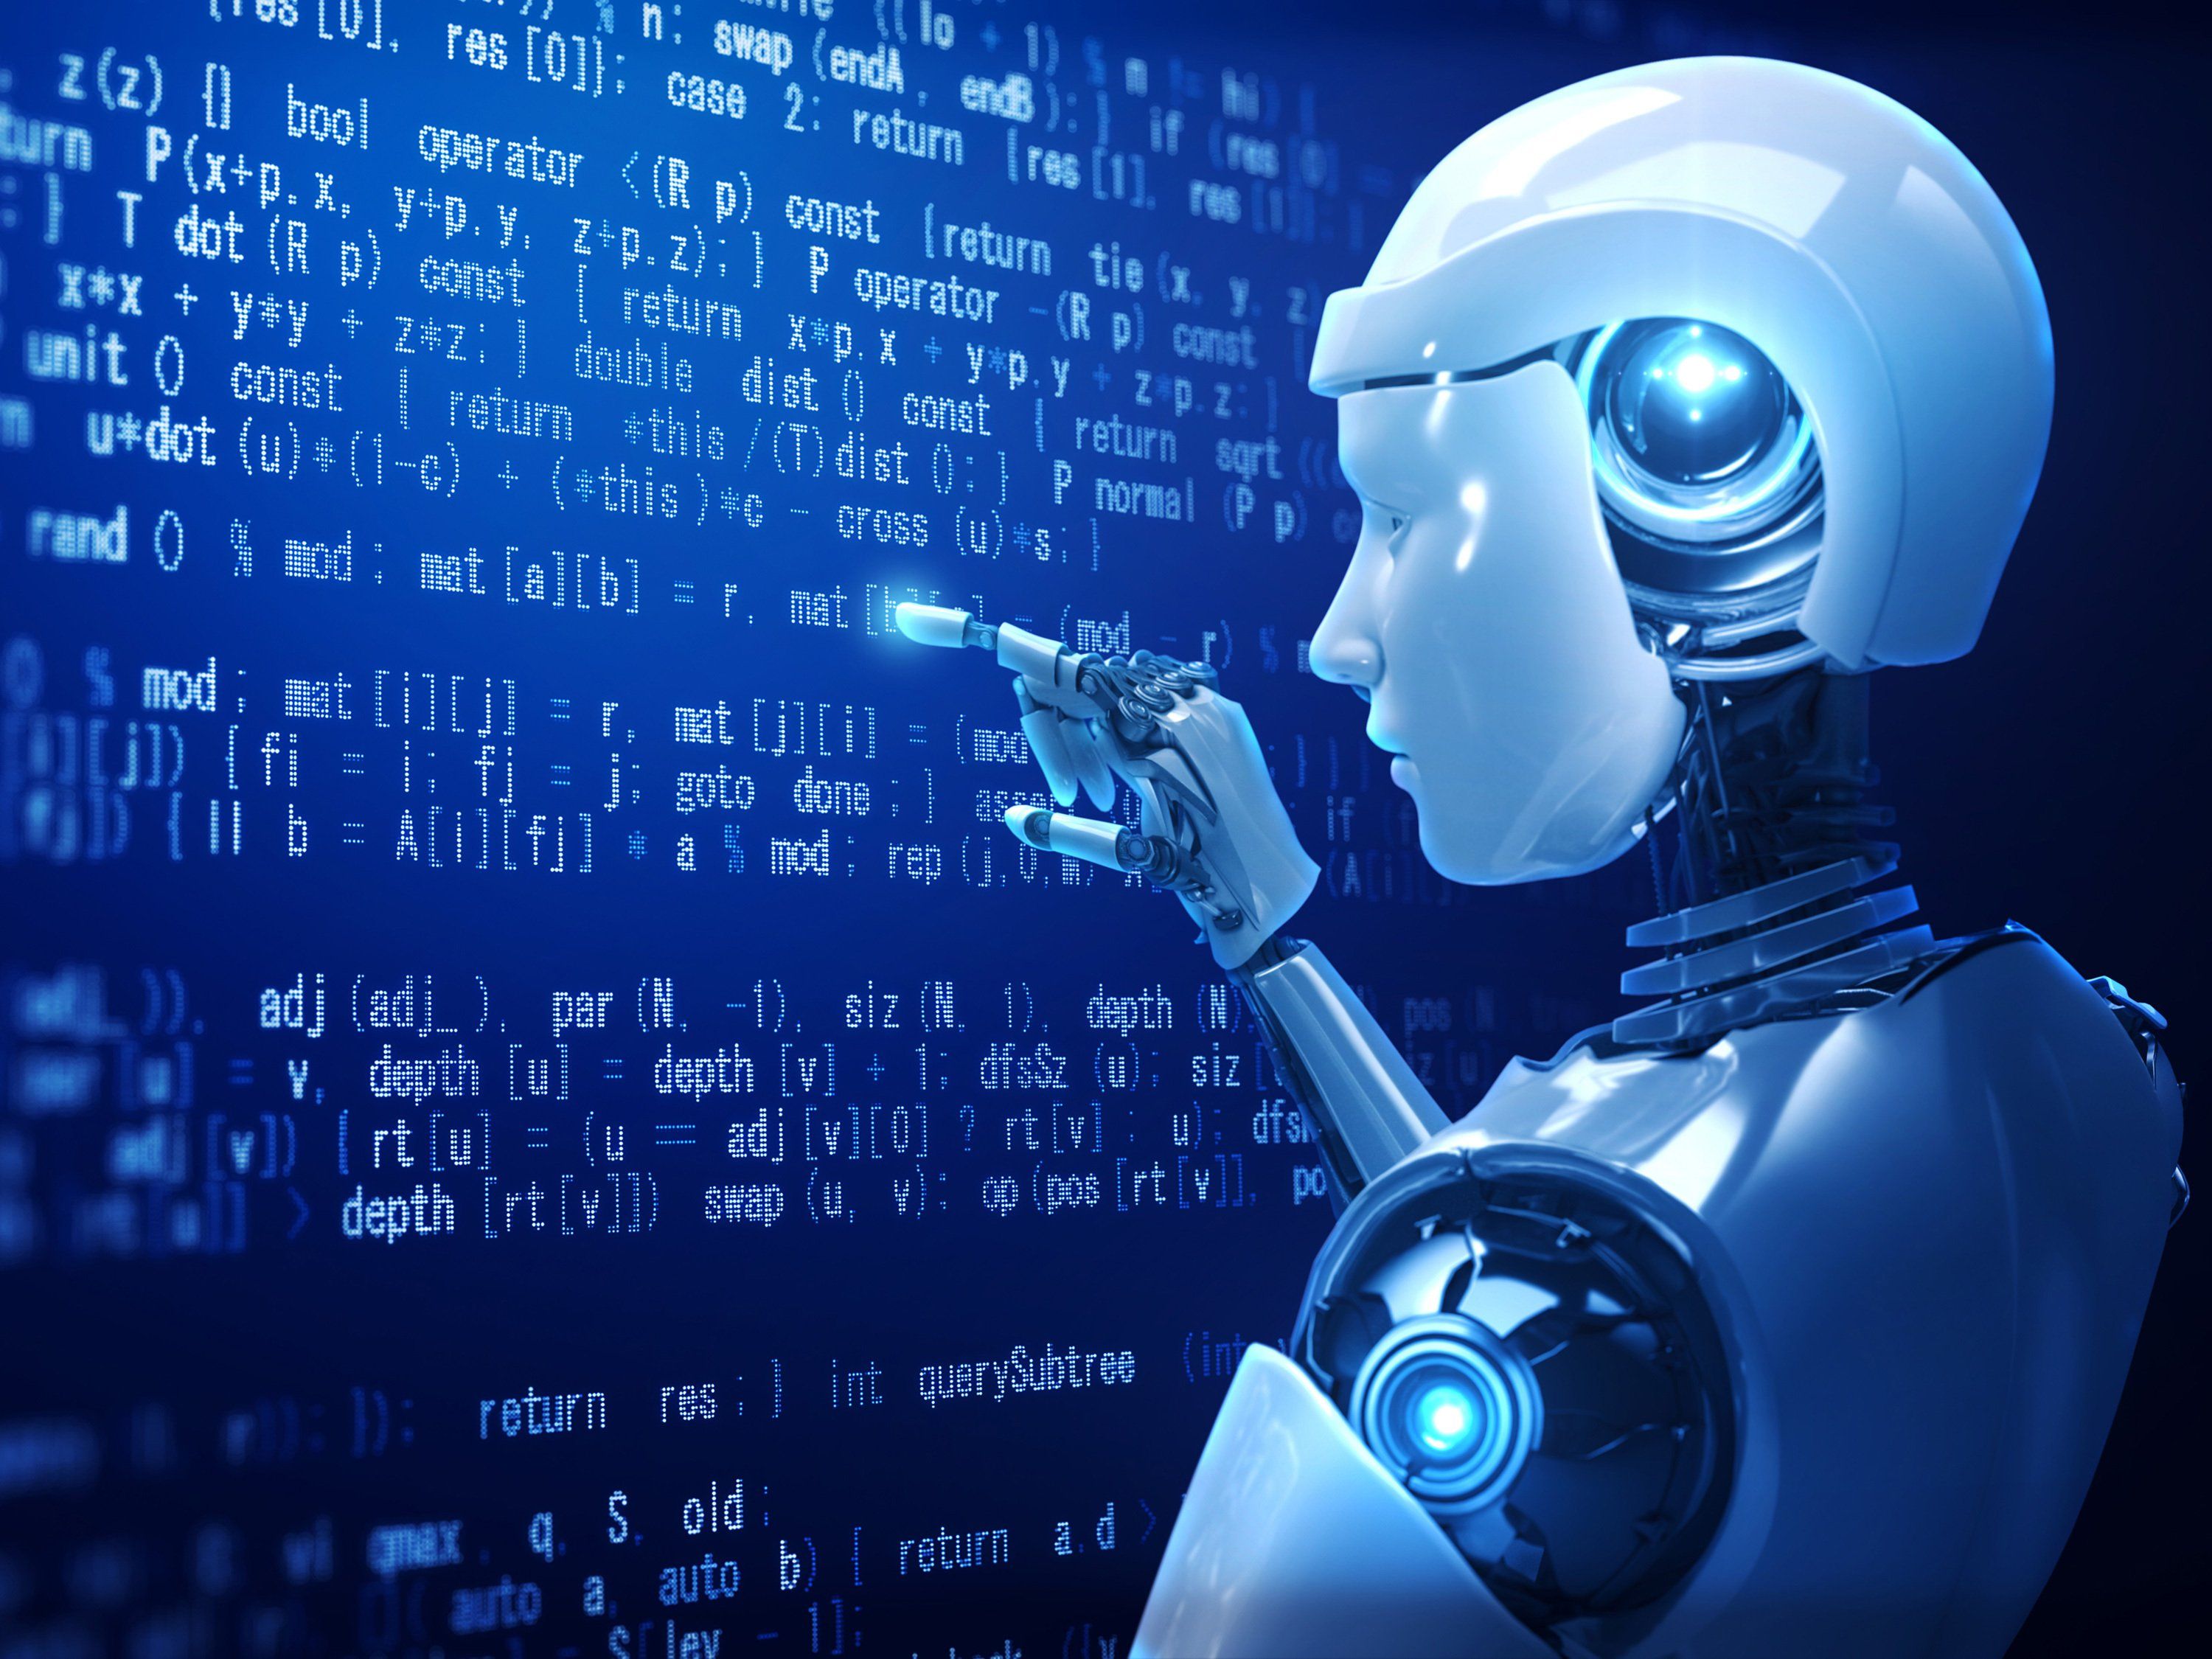 robot looking at screen of computer software language